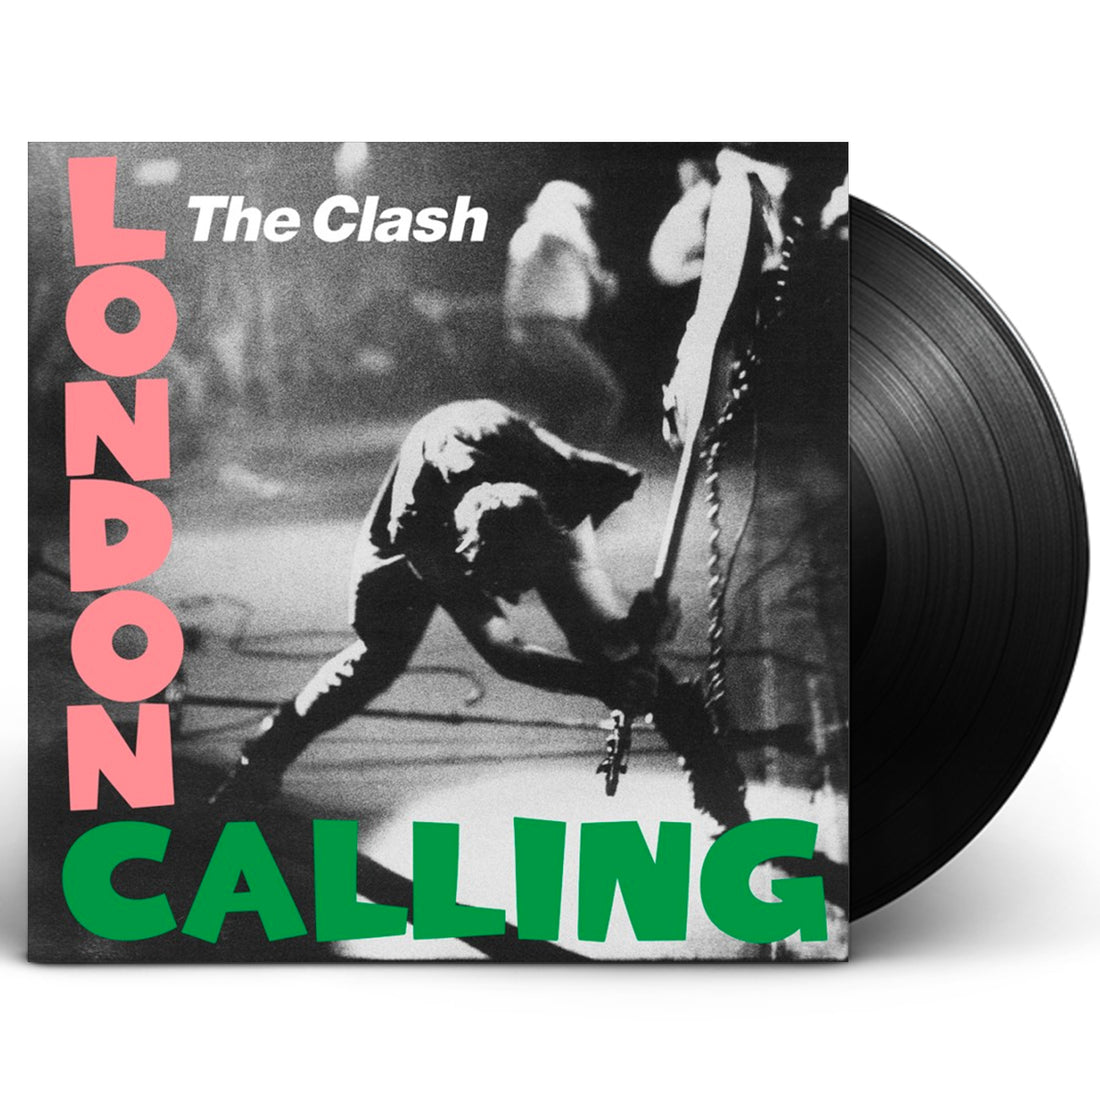 The Clash "London Calling" 2xLP Vinyl